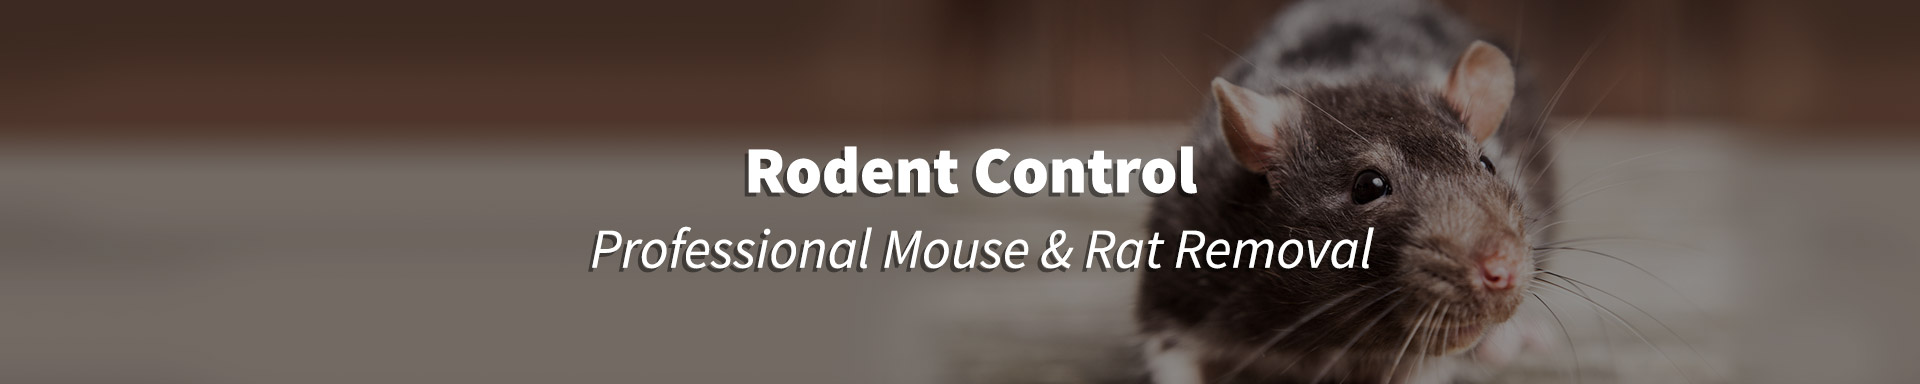 rodent control header